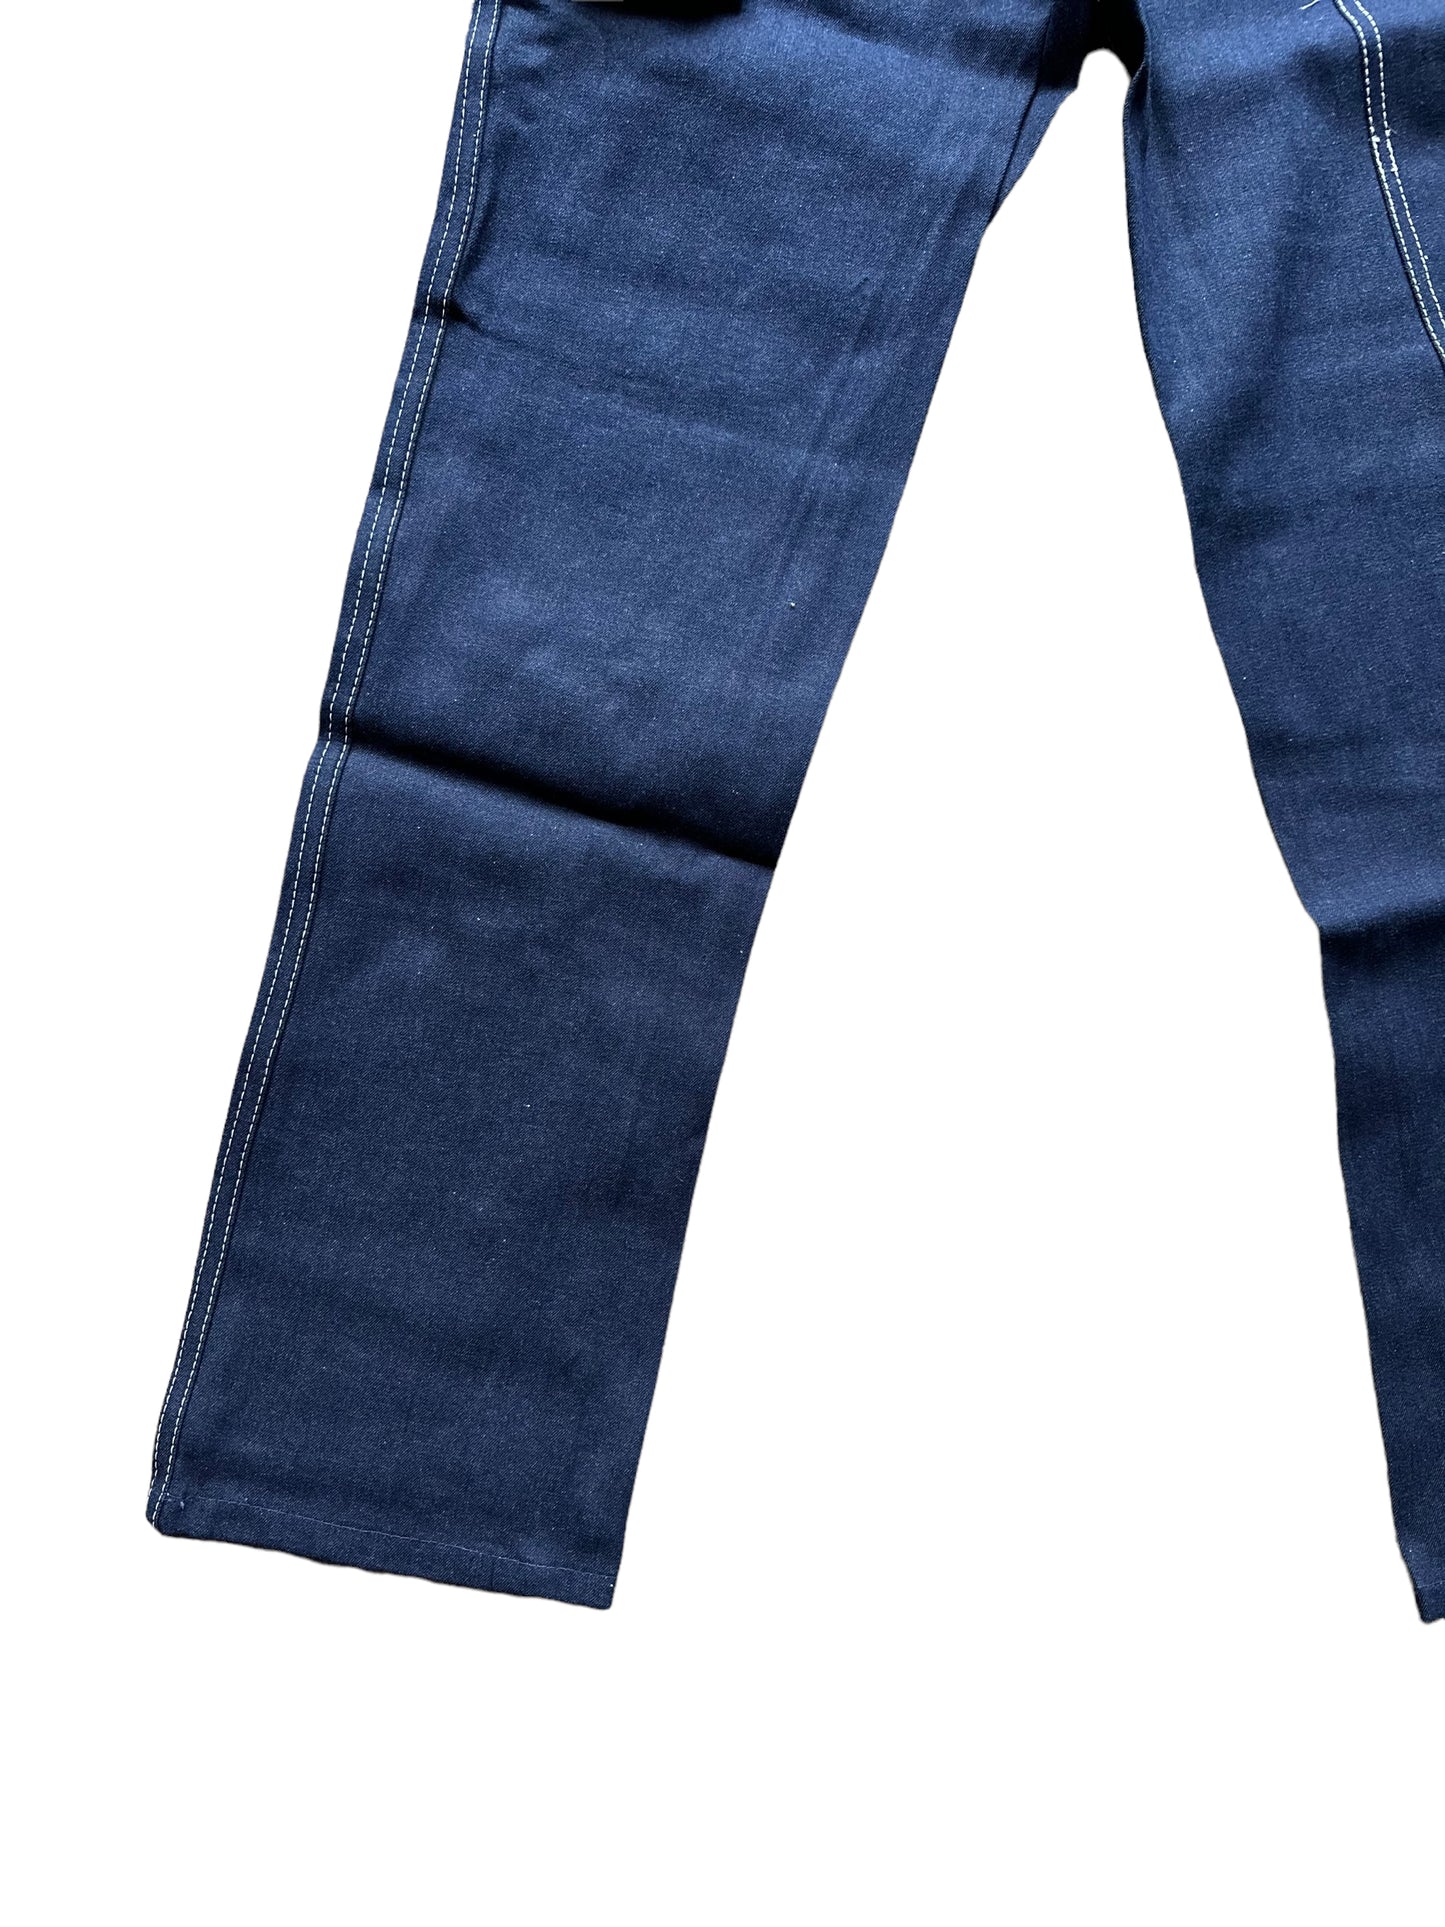 Rear Lower Left Leg View on NOS Vintage Carter's Carpenter Jeans W26 L32 | Vintage Workwear Seattle | Barn Owl Vintage Clothing